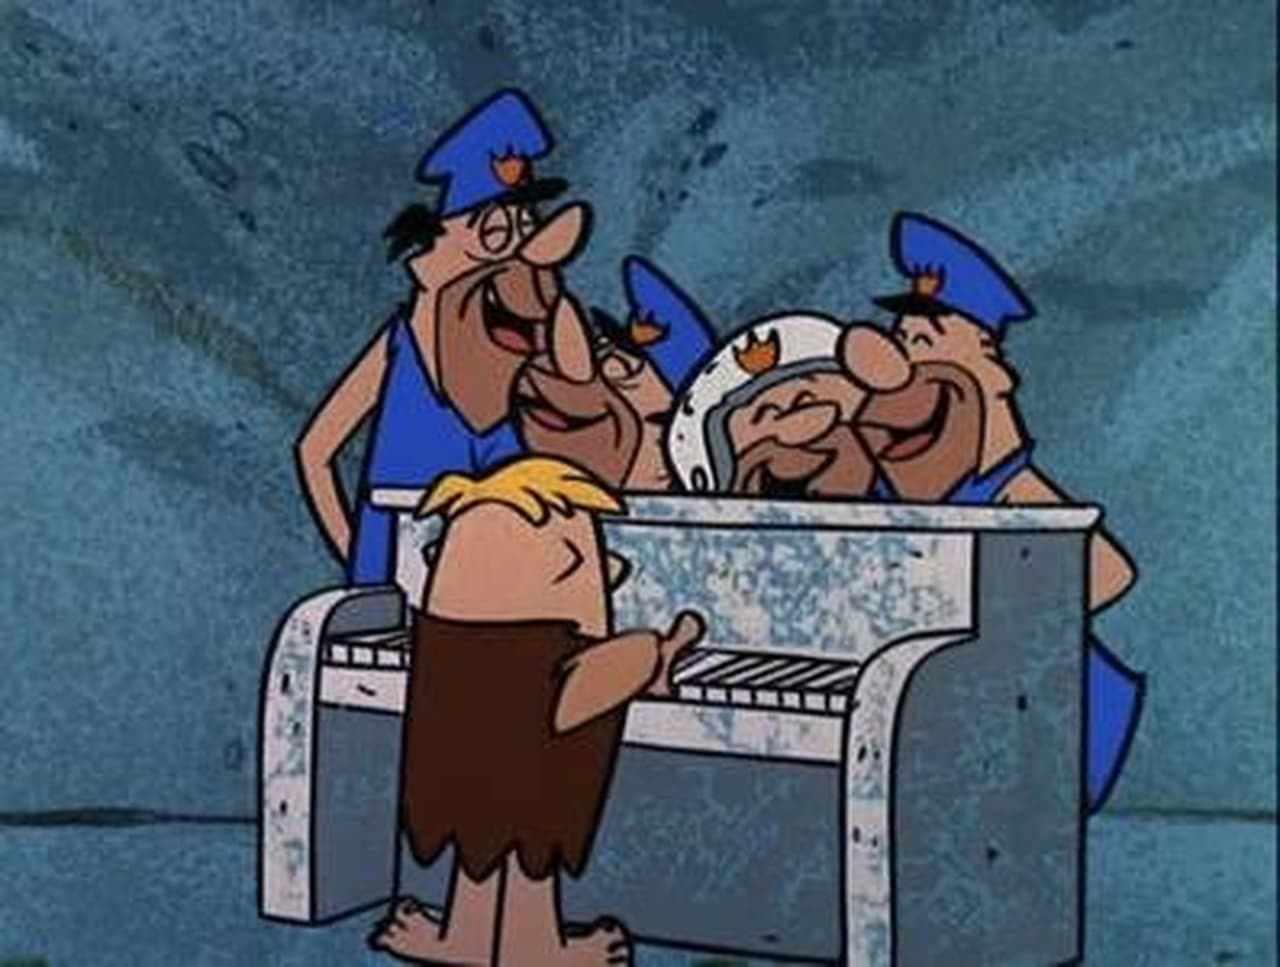 The Flintstones Season 1 Episode 19 (The Hot Piano) Images & Pictures. 